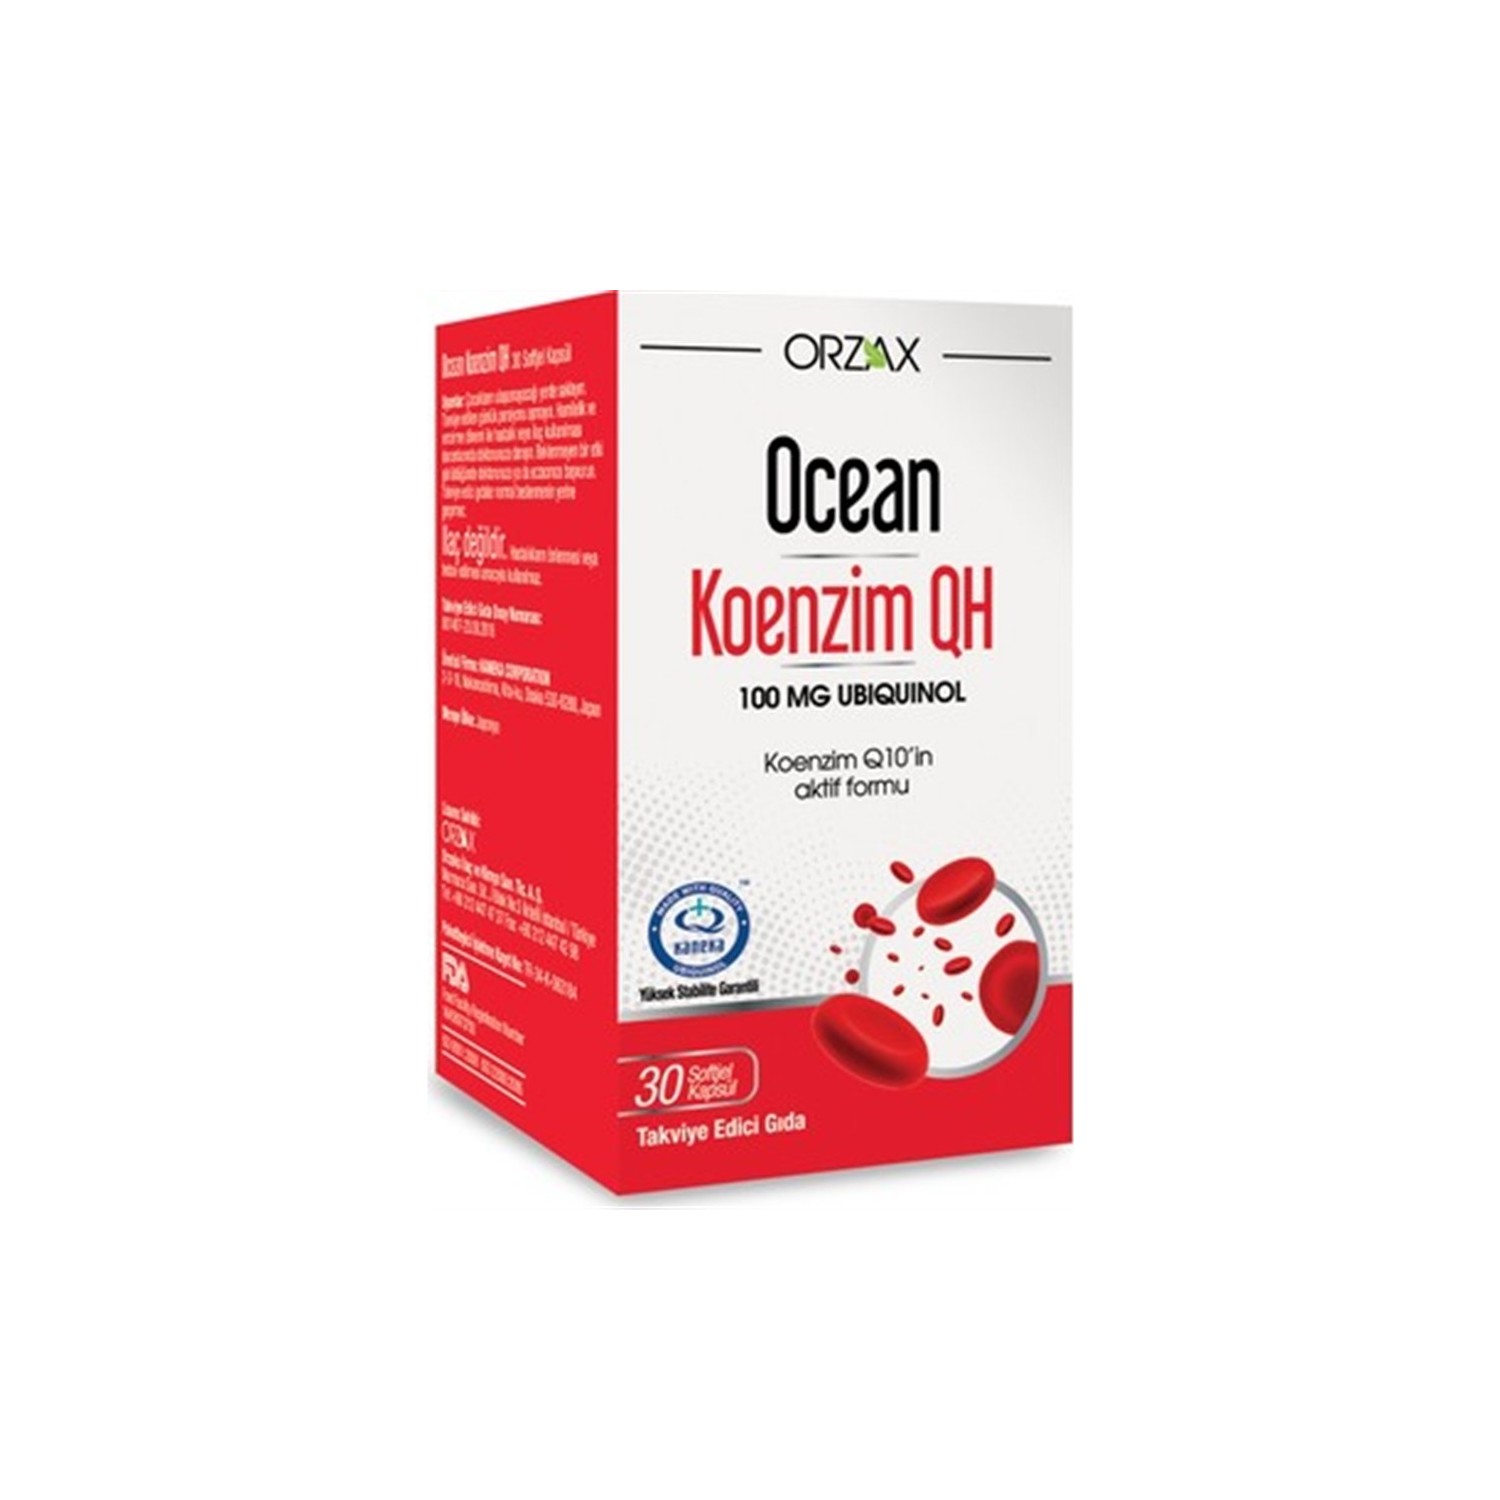 пищевая добавка orzax ocean picozinc supplementary food 3 упаковки по 30 капсул Коэнзим Q10 Ocean, 30 капсул